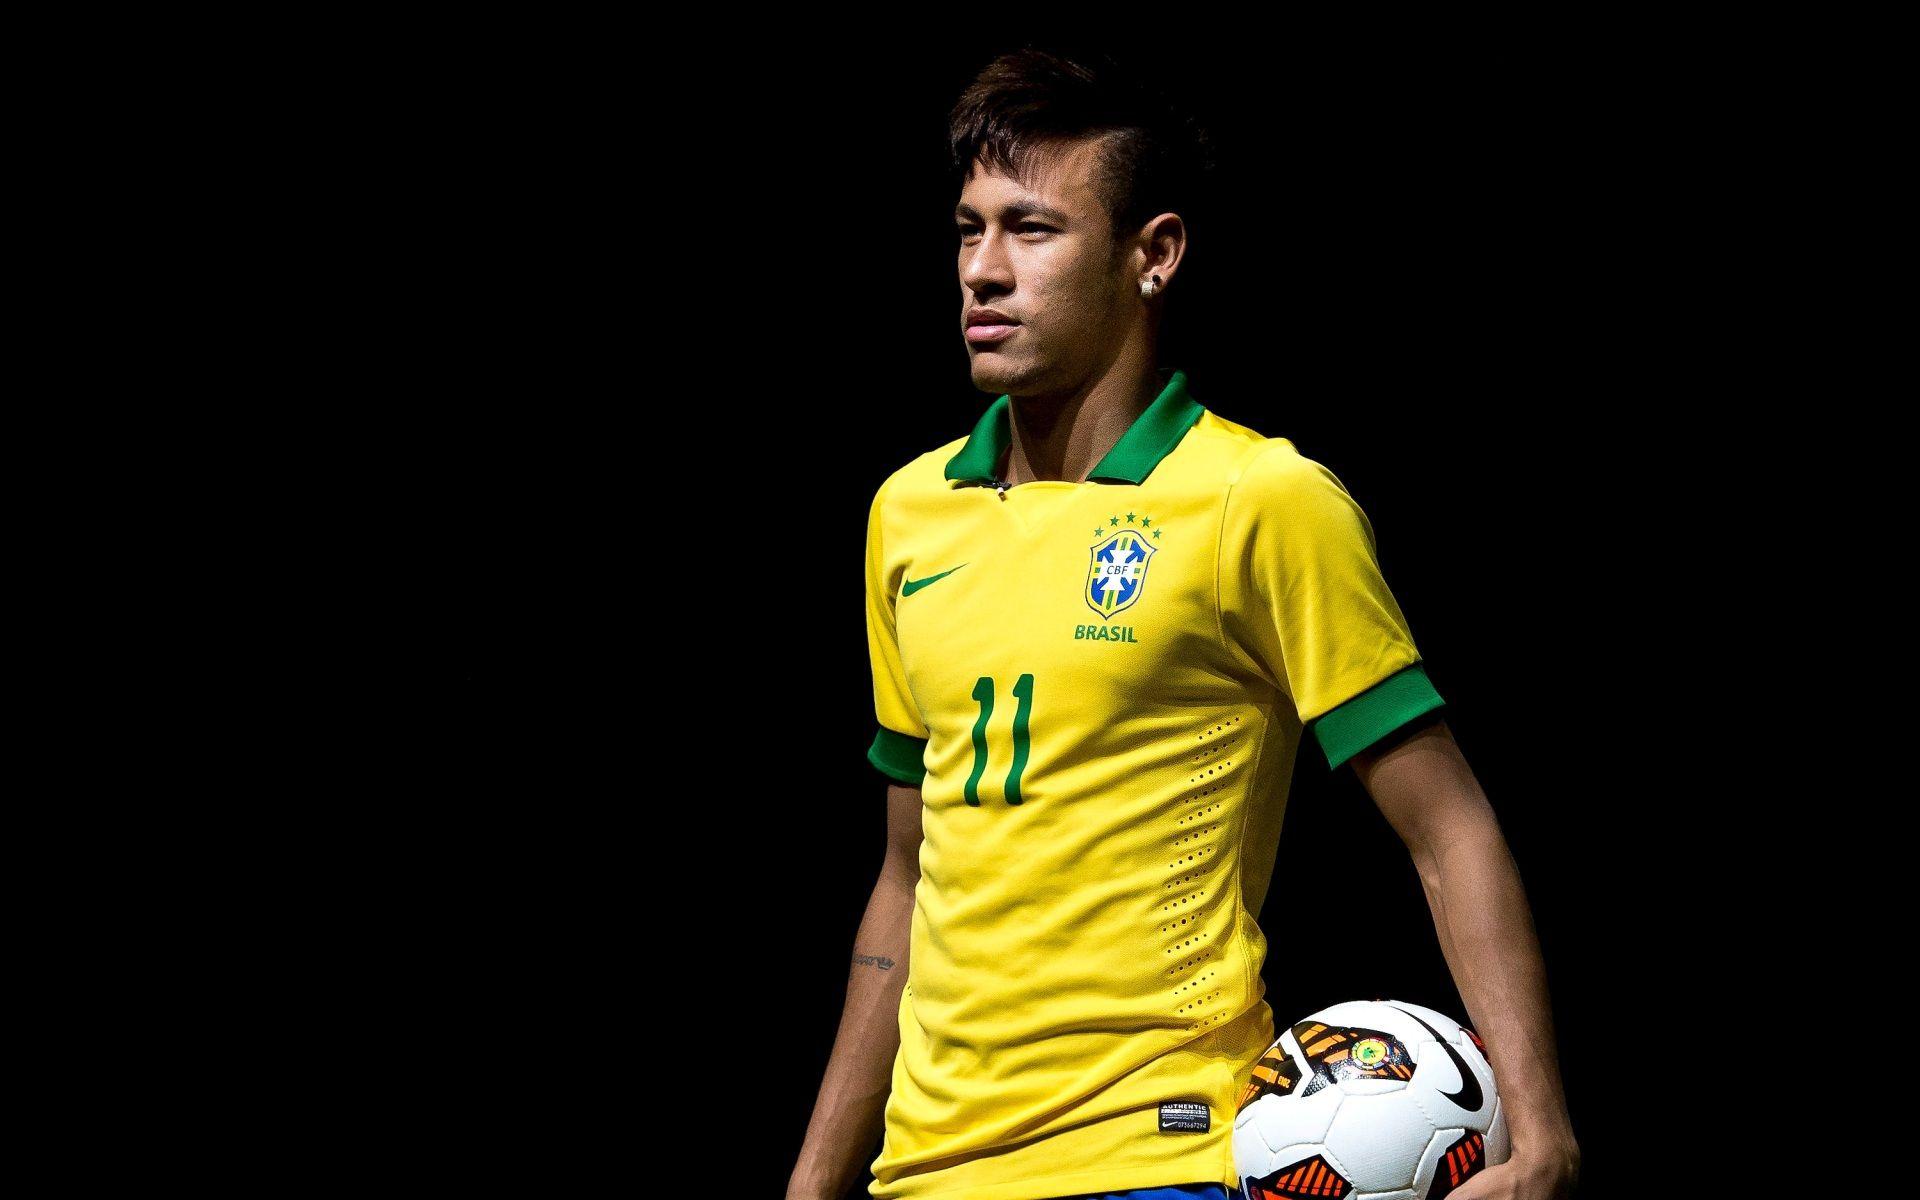 neymar jr brazil image wallpaper 2014. Wallput